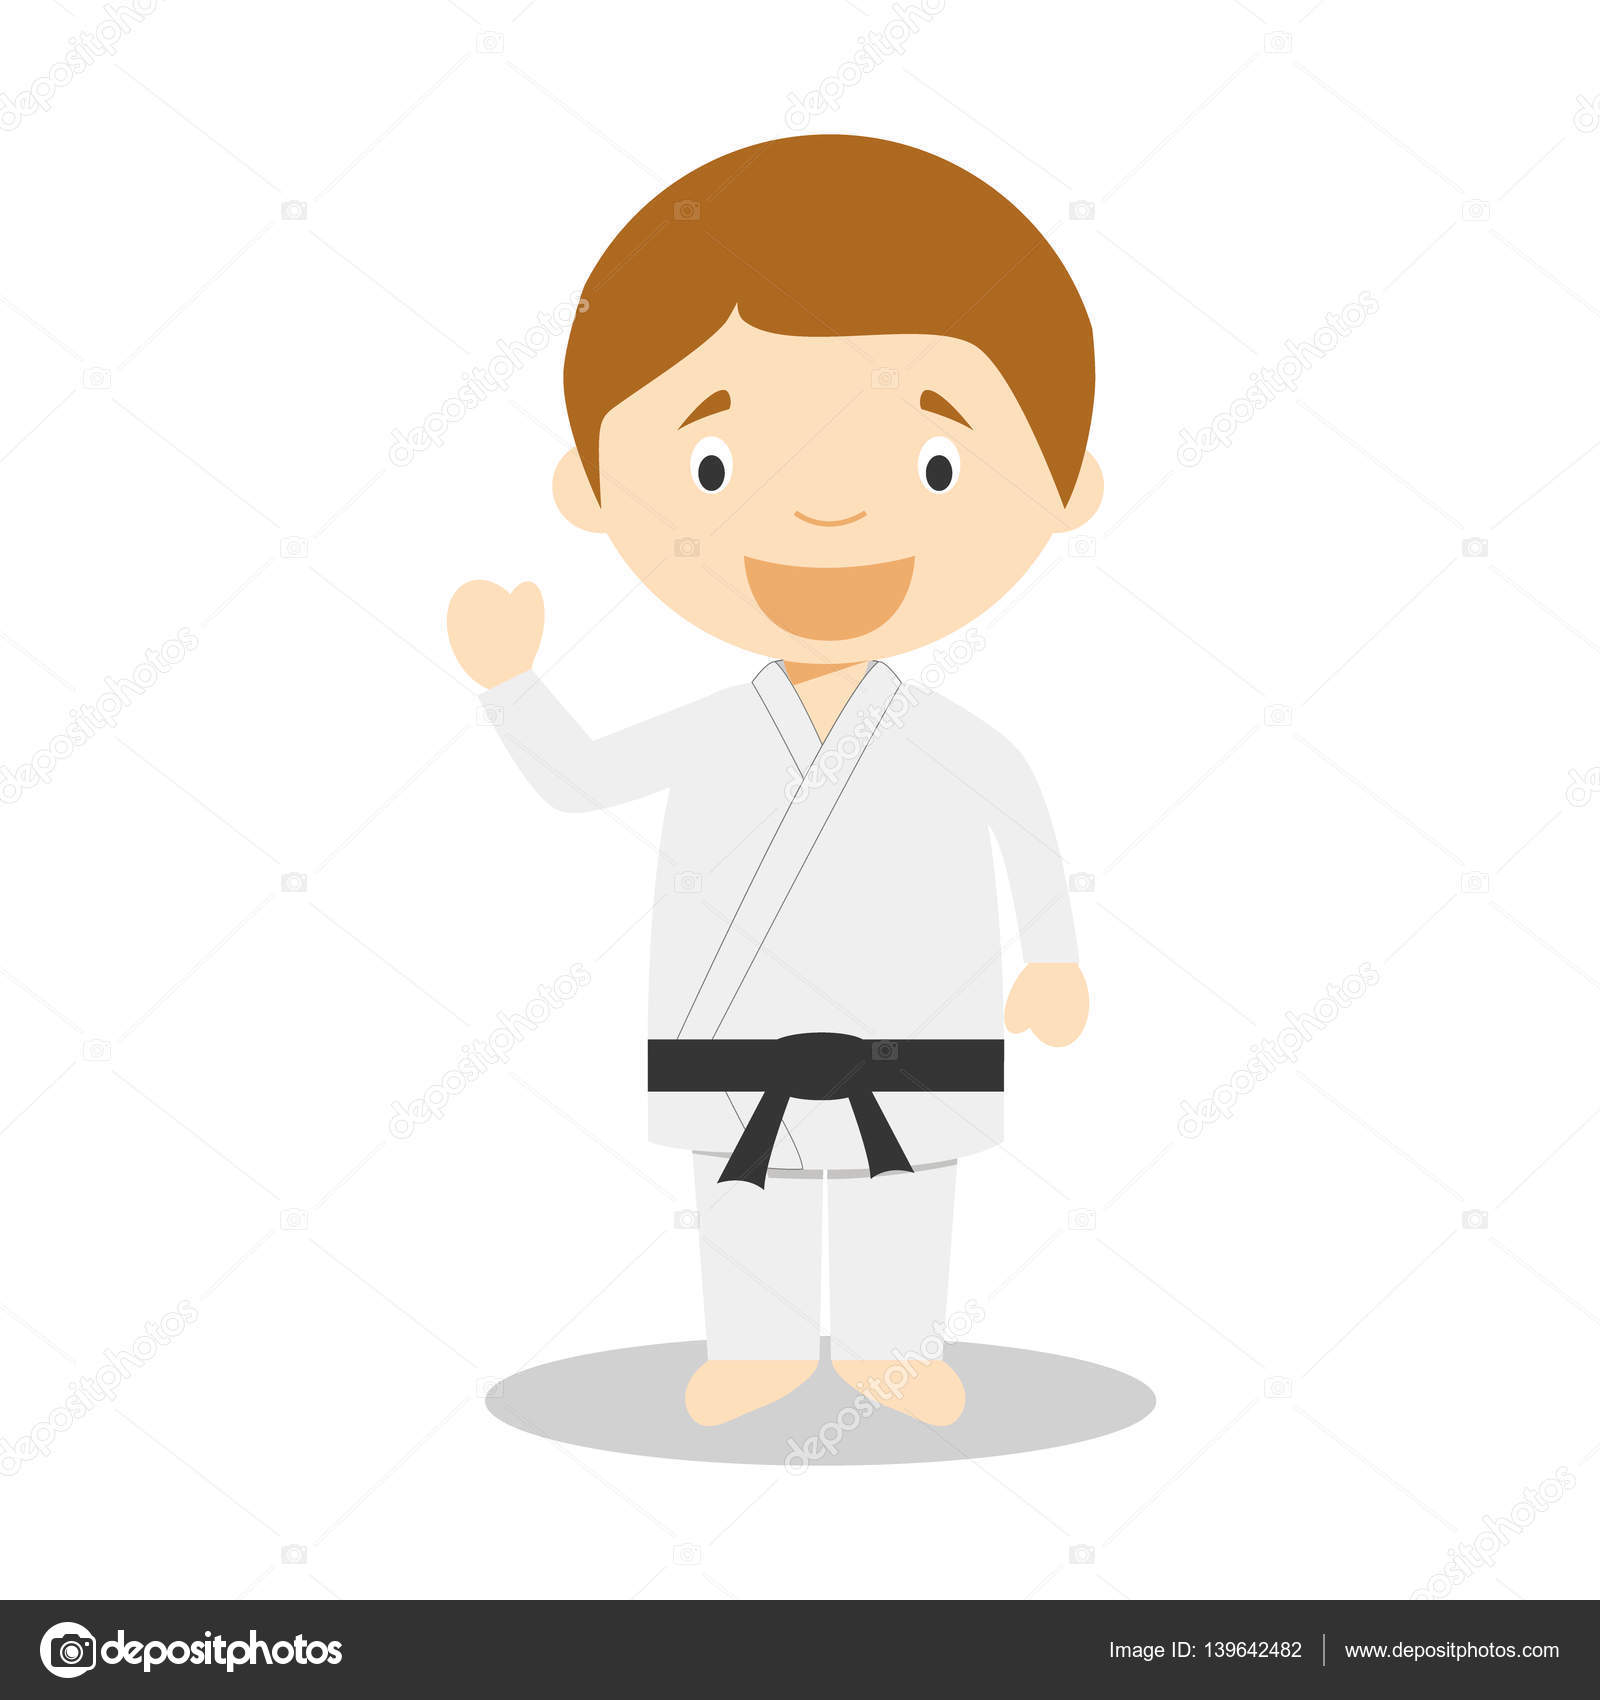 Sports cartoon vector illustrations: Judo Stock Vector Image by ©asantosg  #139642482